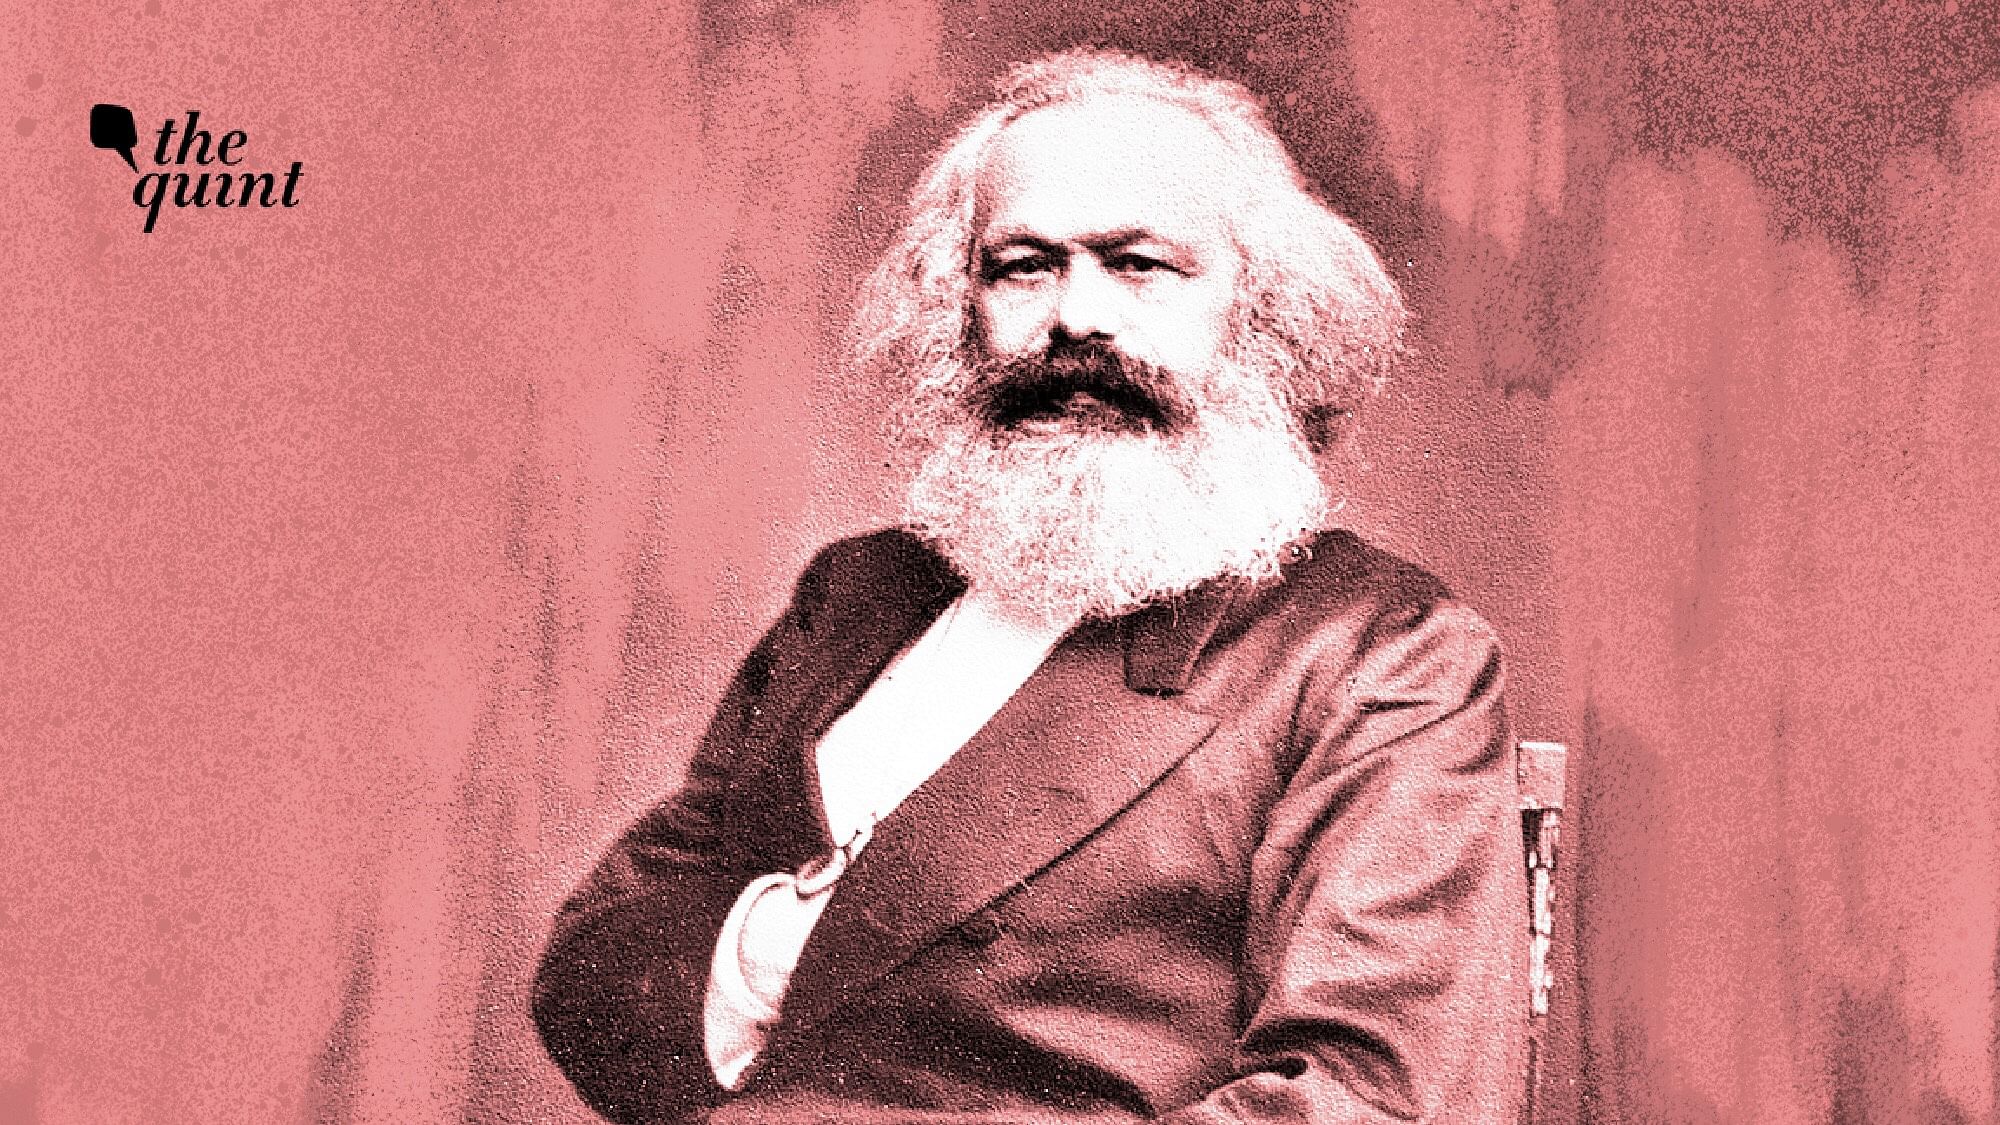 Image of philosopher Karl Marx used for representational purposes.